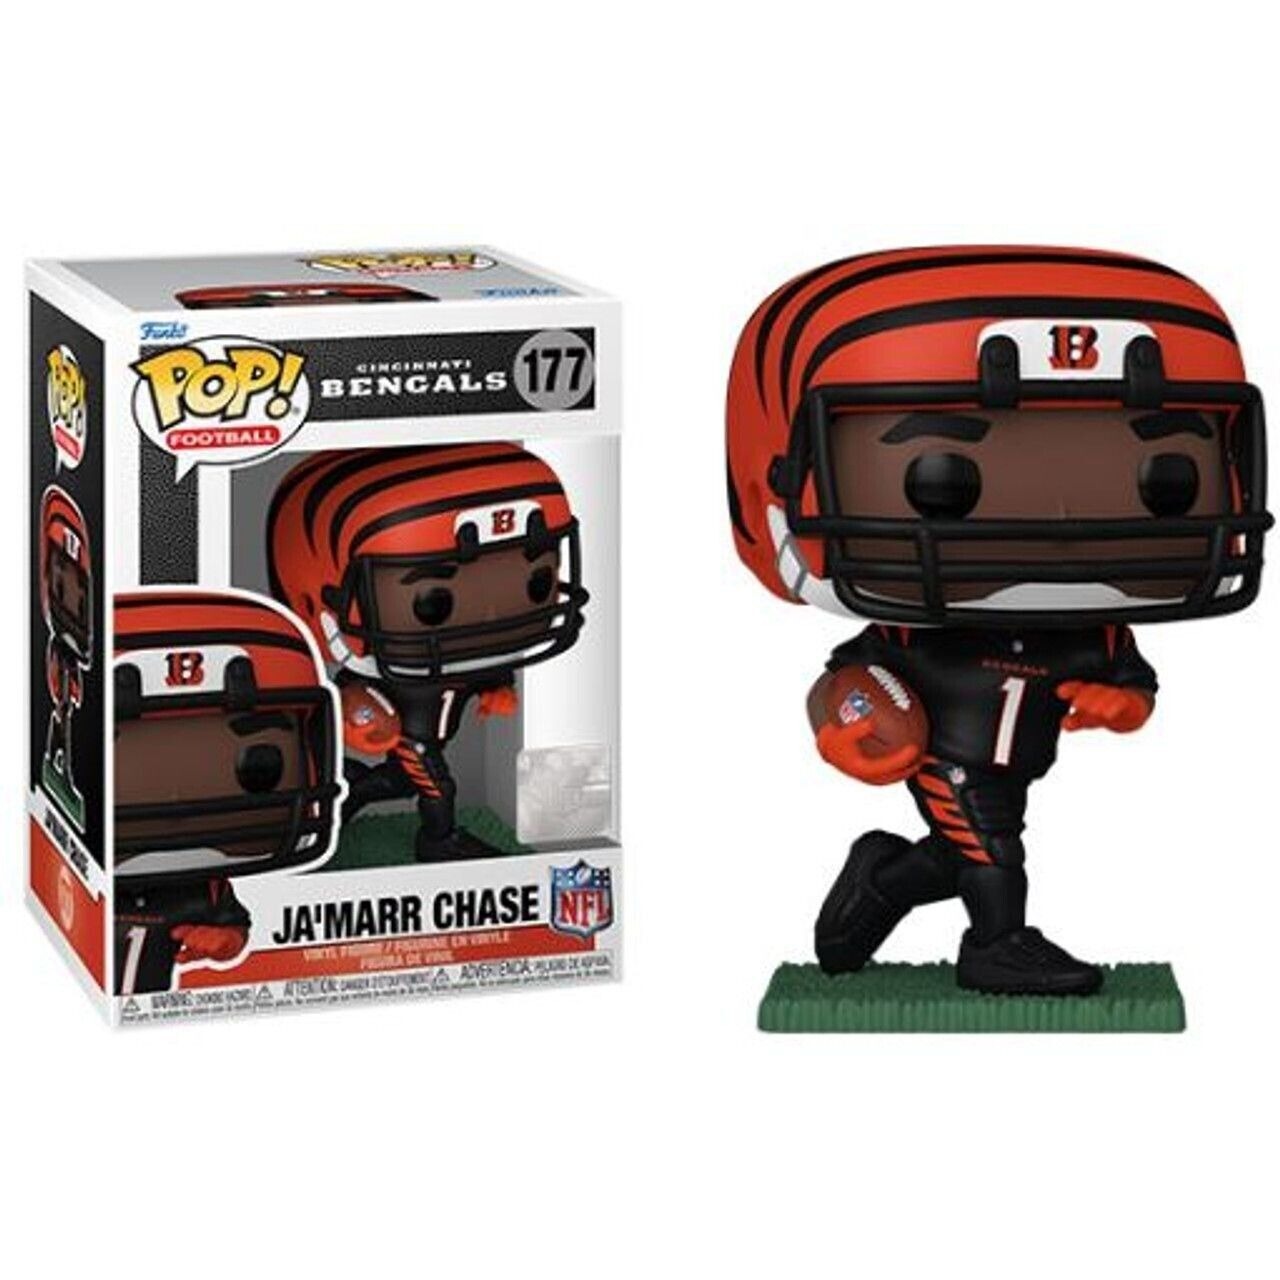 Funko POP! NFL Football - Ja'Marr Chase Cincinnati Bengals Figure #177